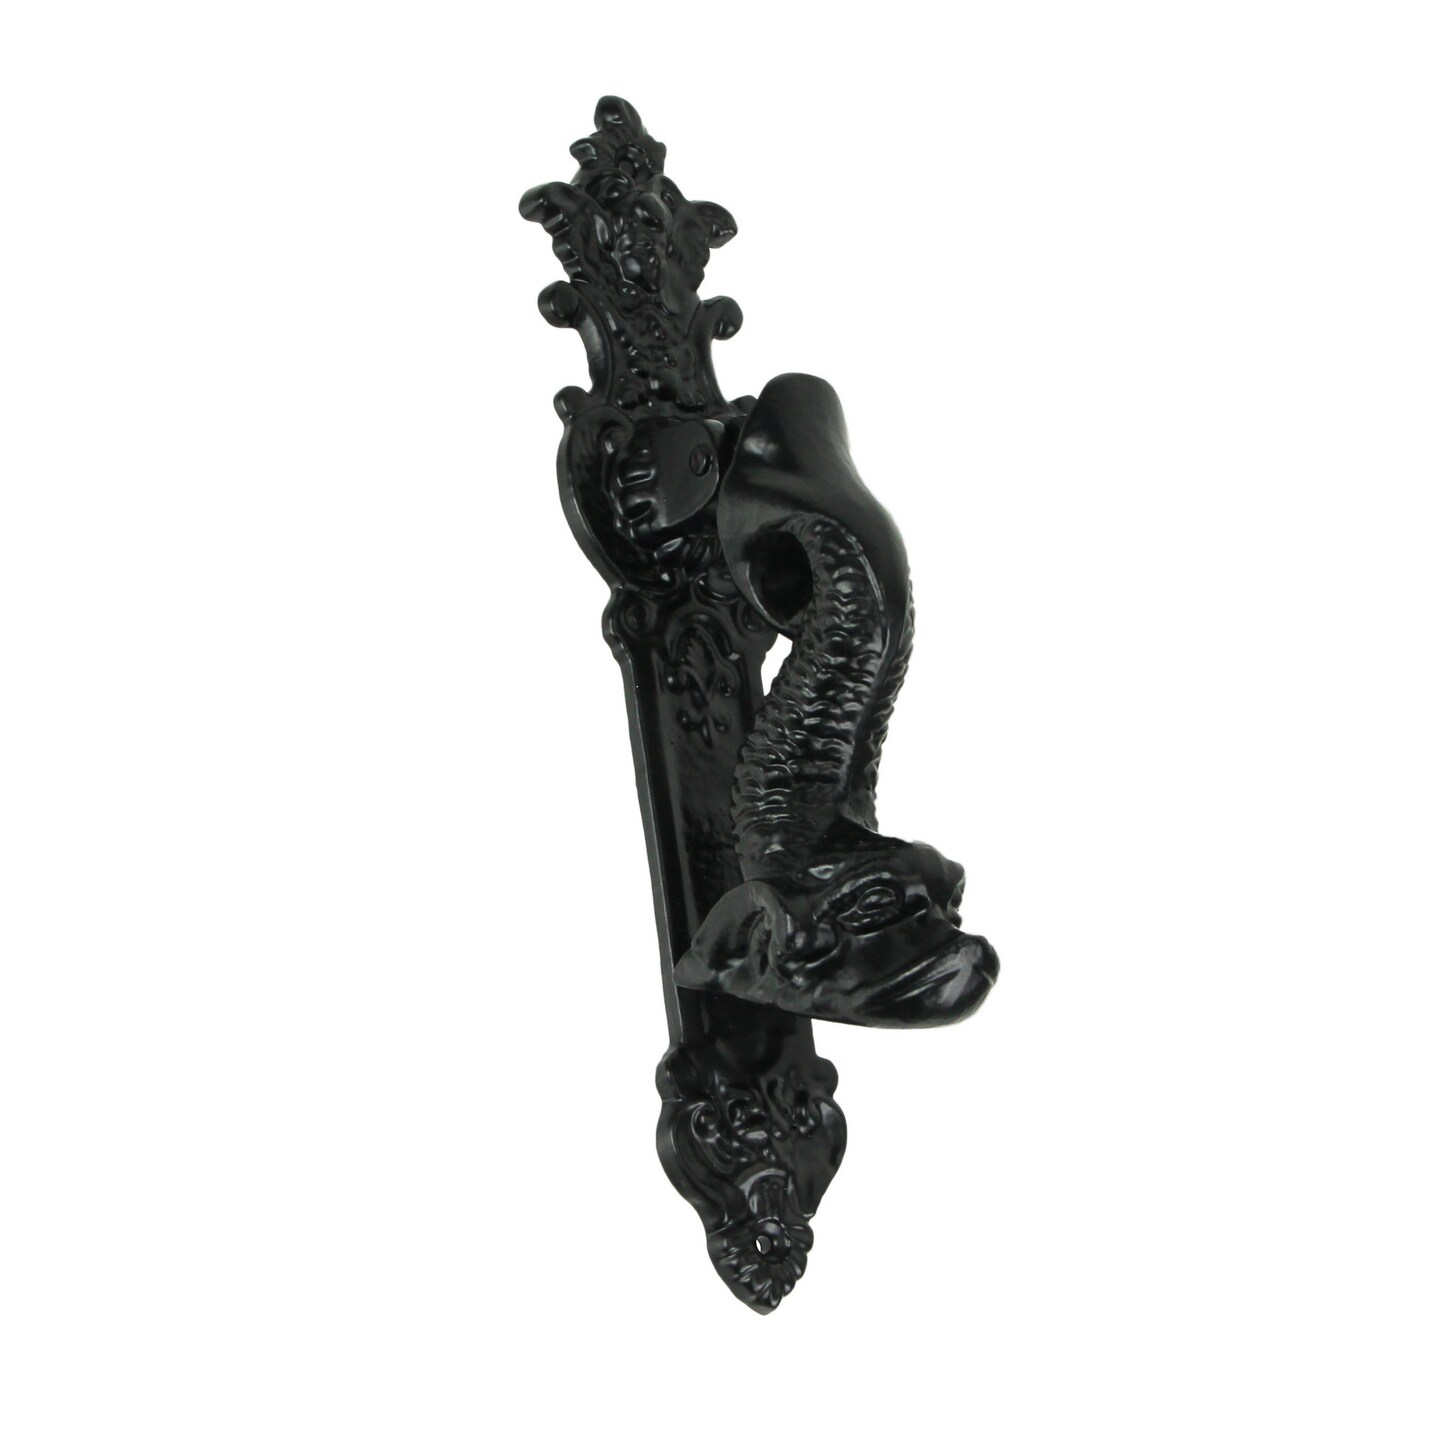 Rustic Black Enamel Cast Iron Roman Dolphin Decorative Door Knocker